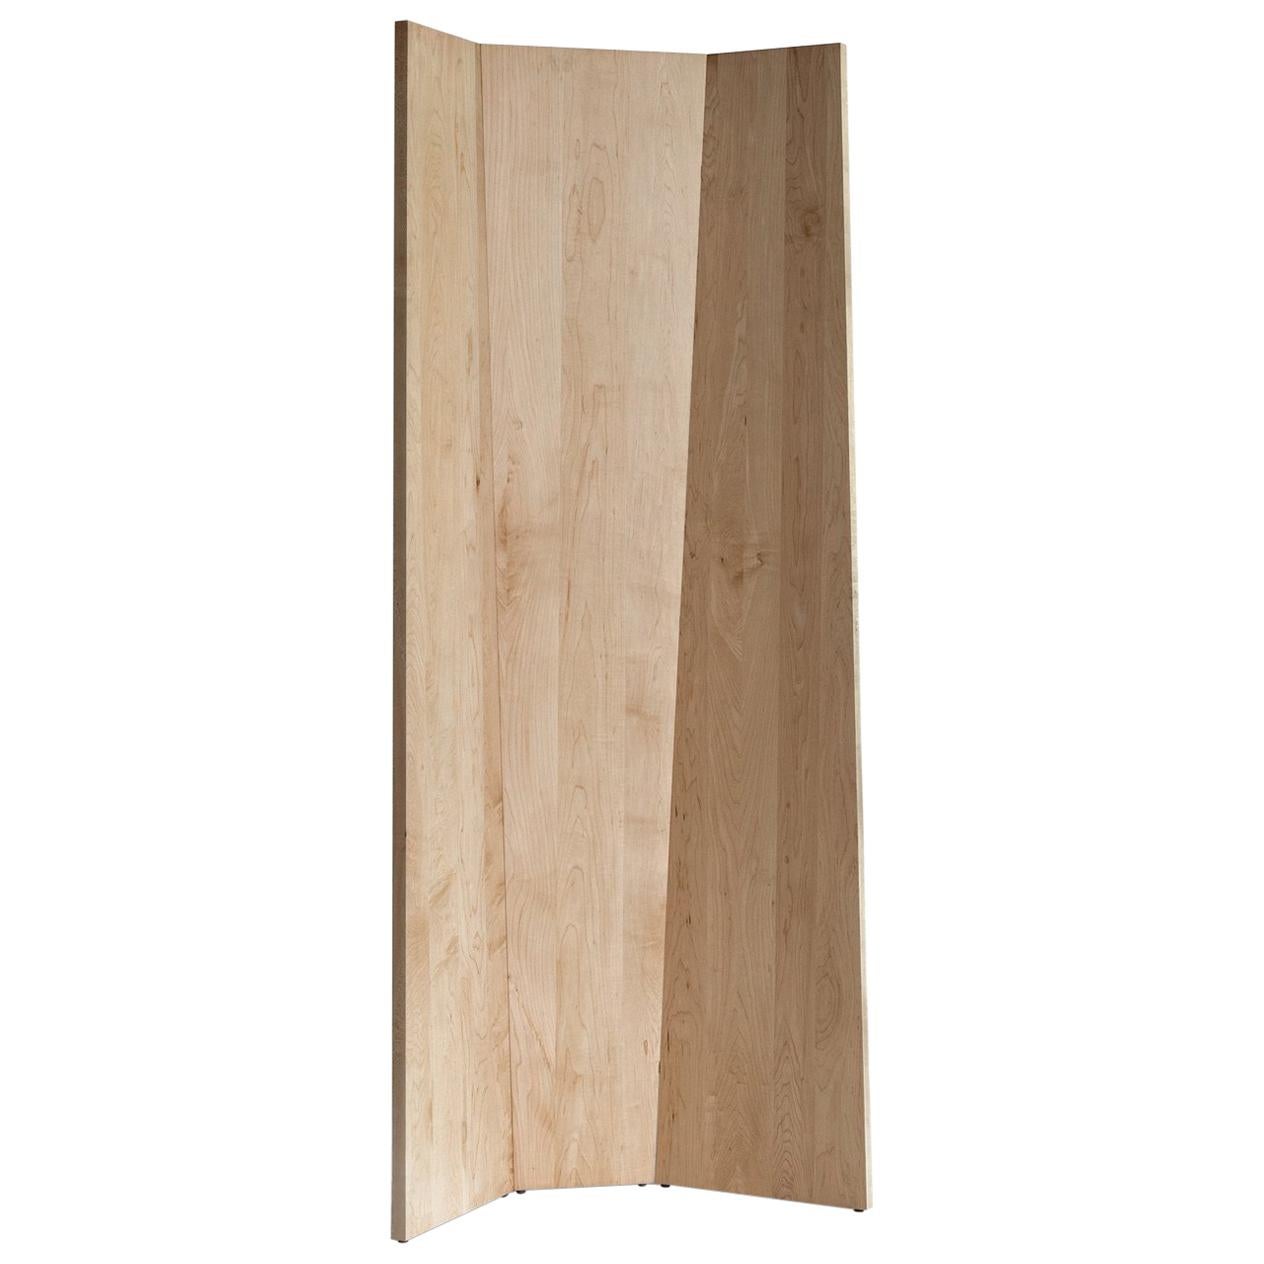 Handmade Tri-Fold Solid Maple Folding Screen or Room Divider